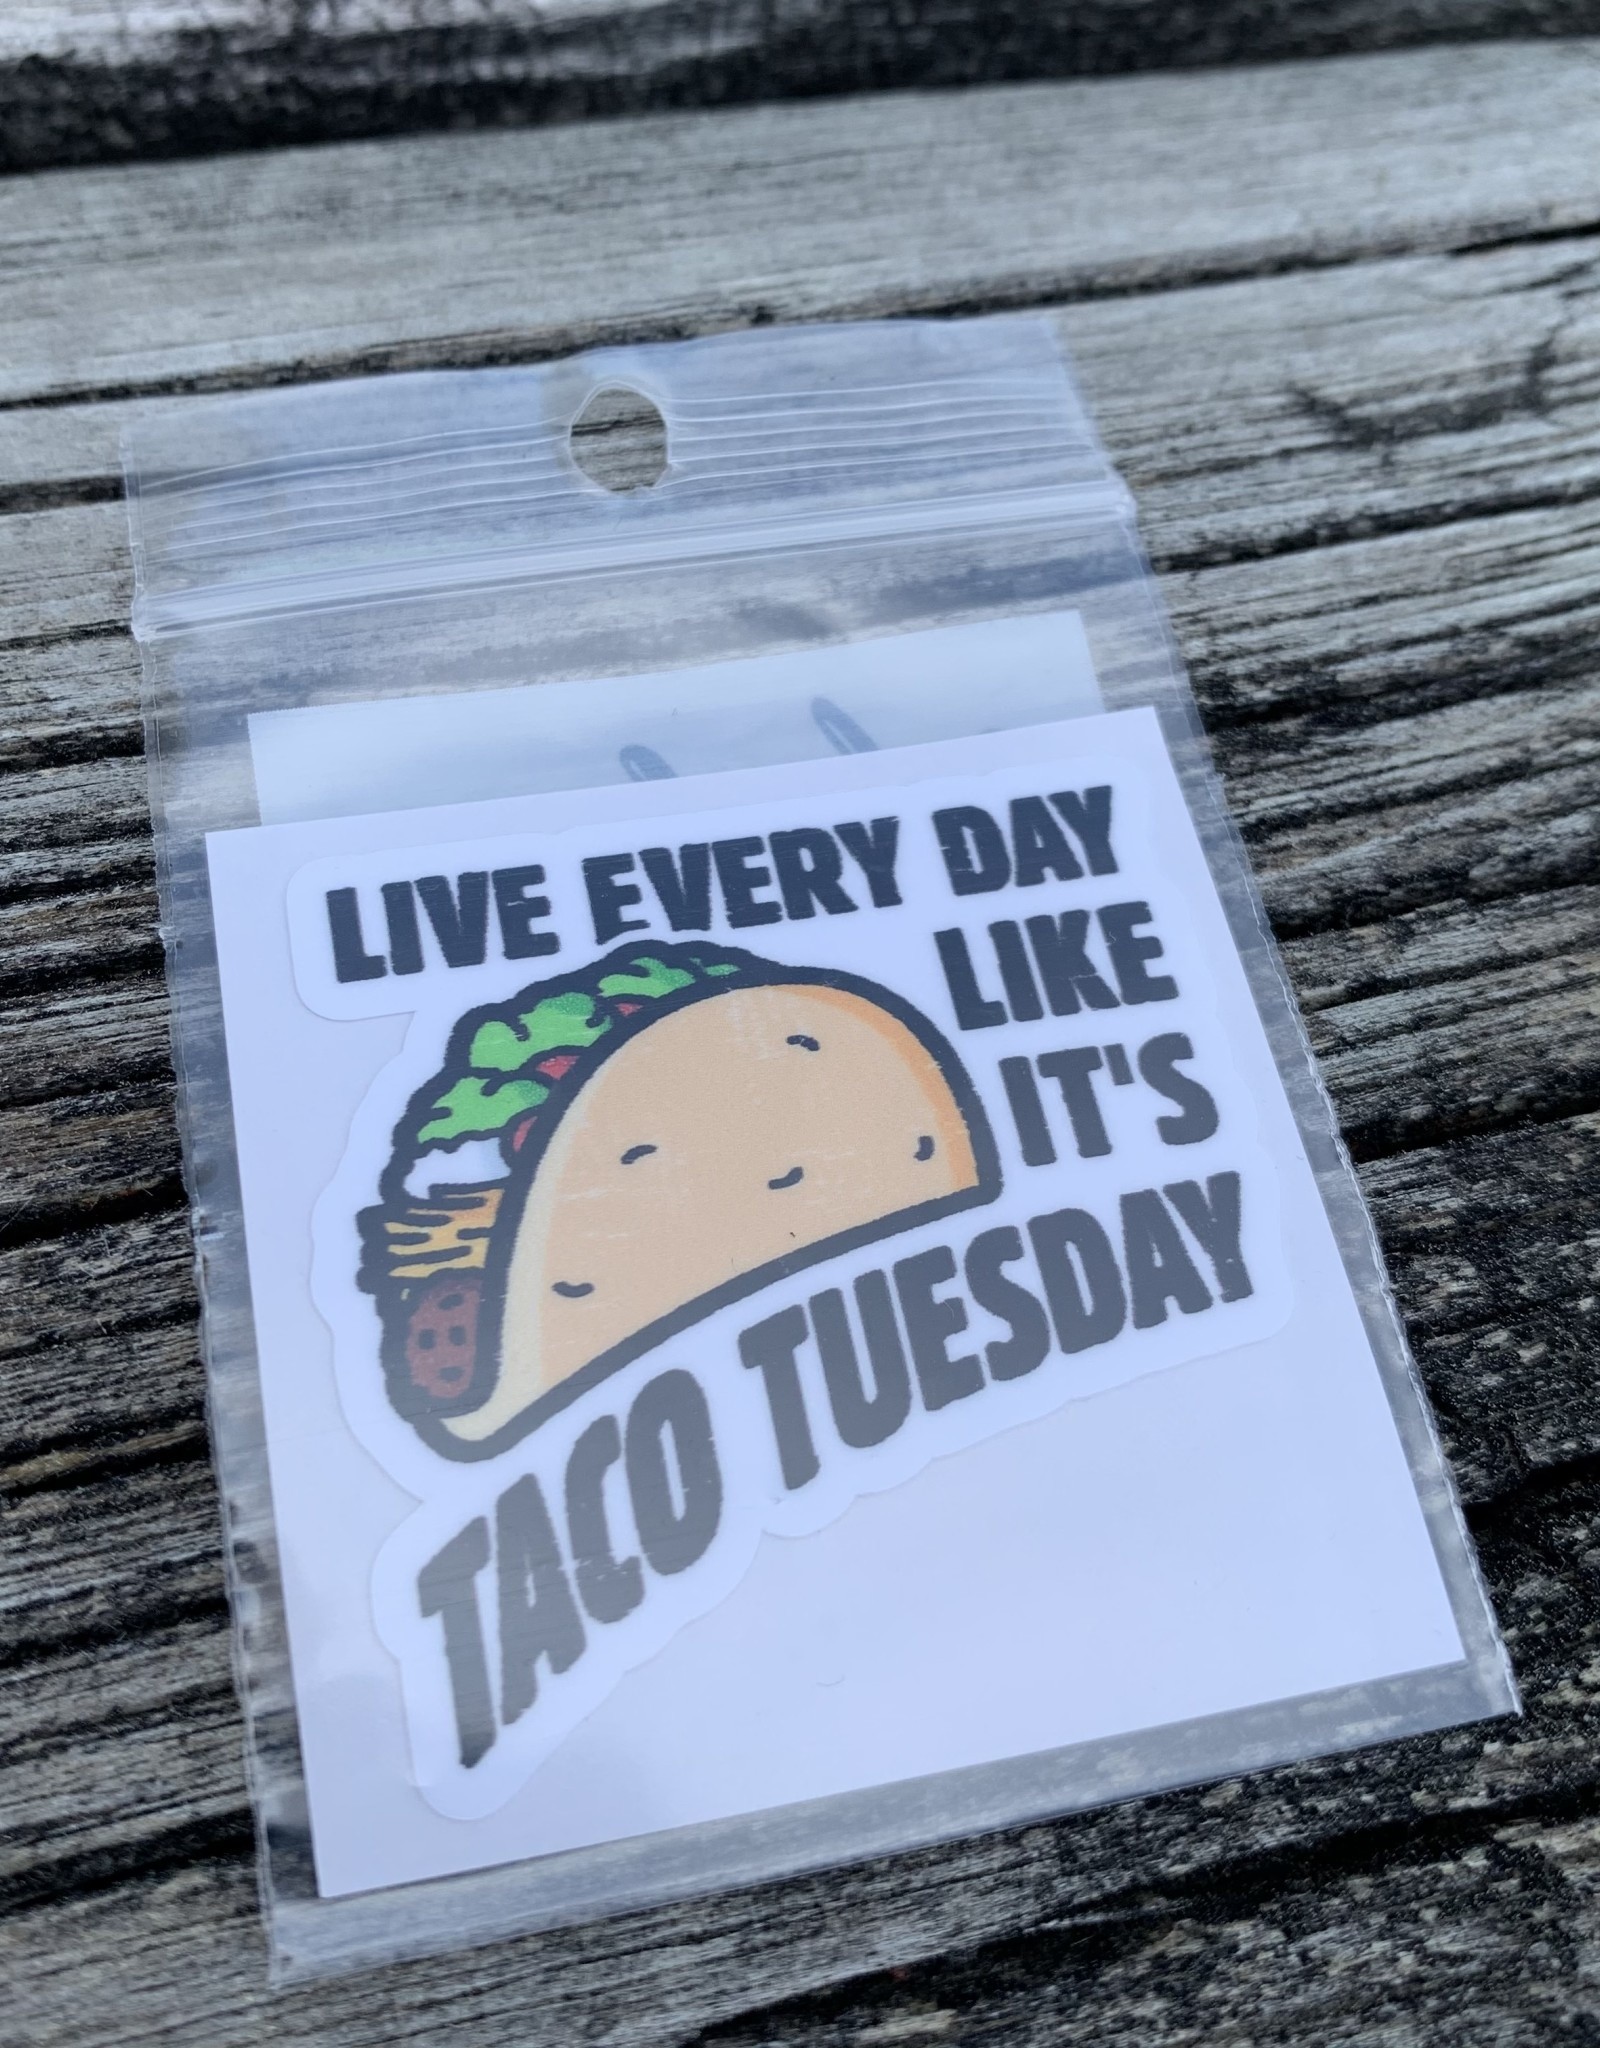 its taco tuesday